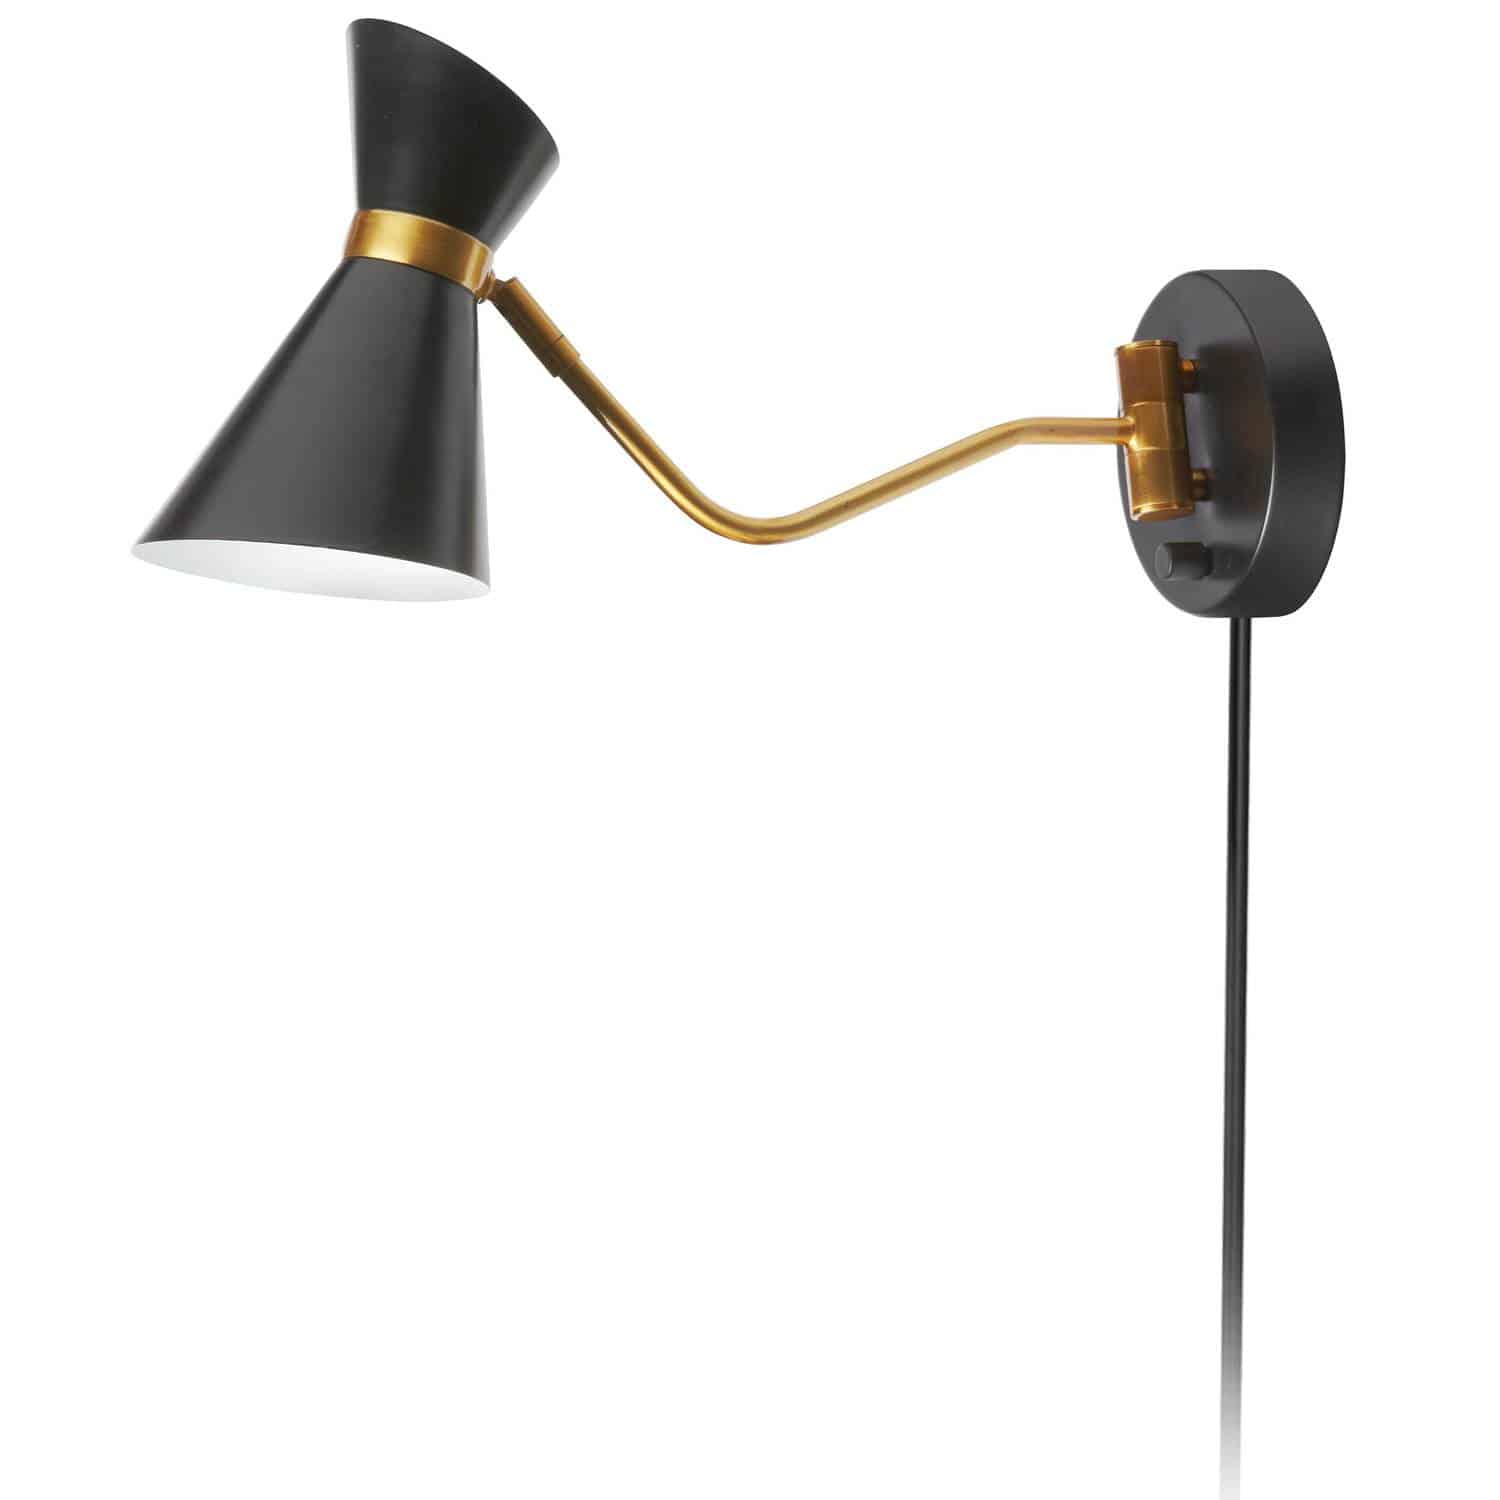 1 Light Swing Arm Lamp, Black / Vintage Bronze Finish